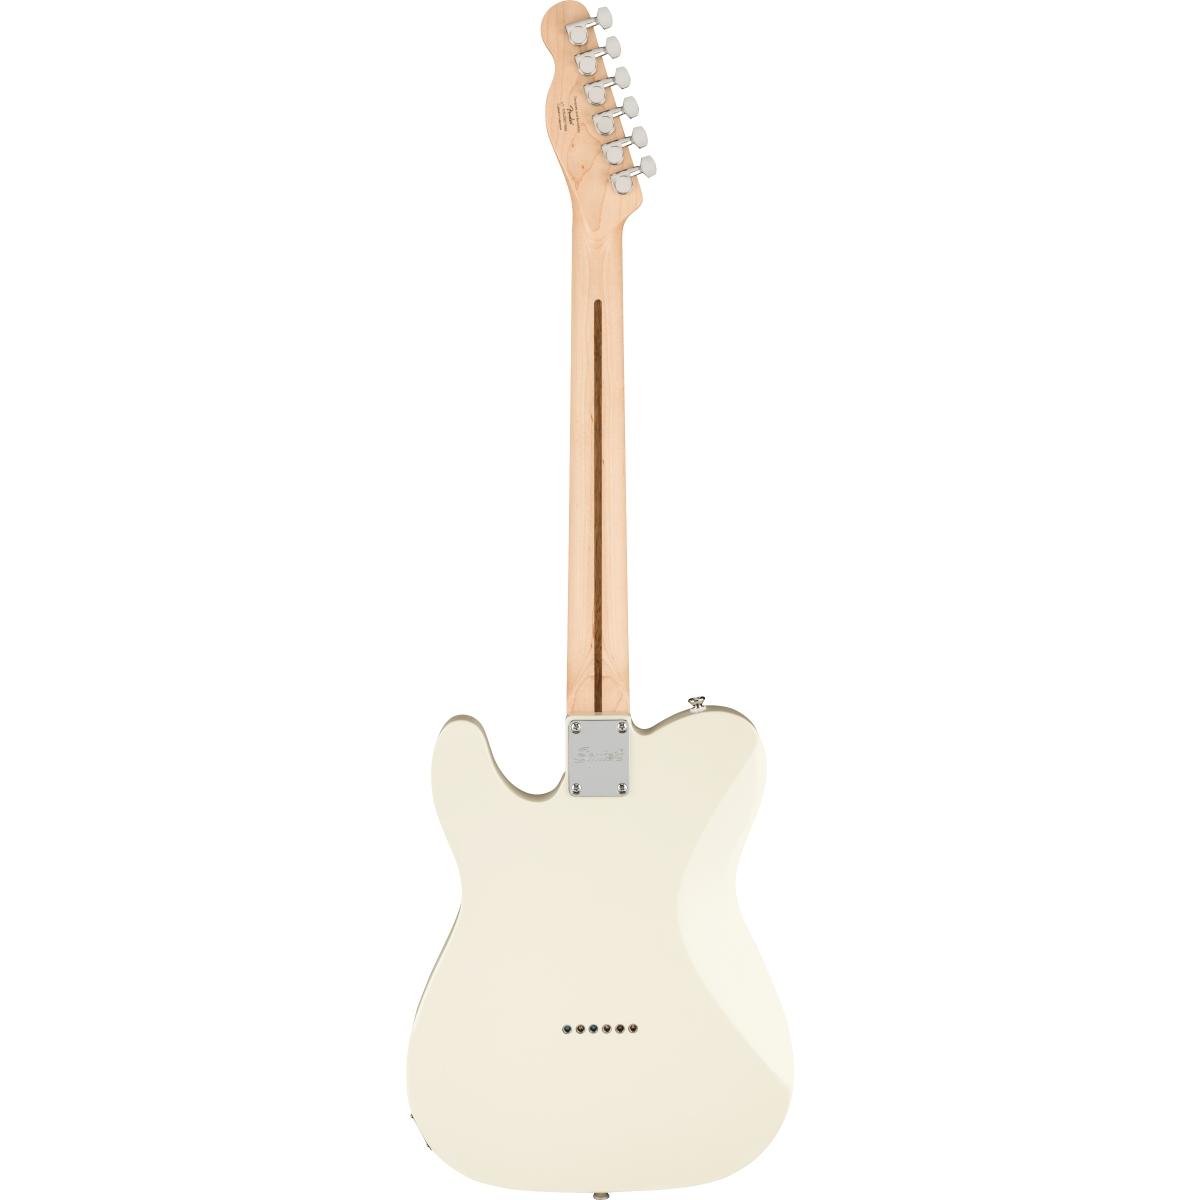 Fender affinity telecaster lrl wpg olympic white chitarra elettrica